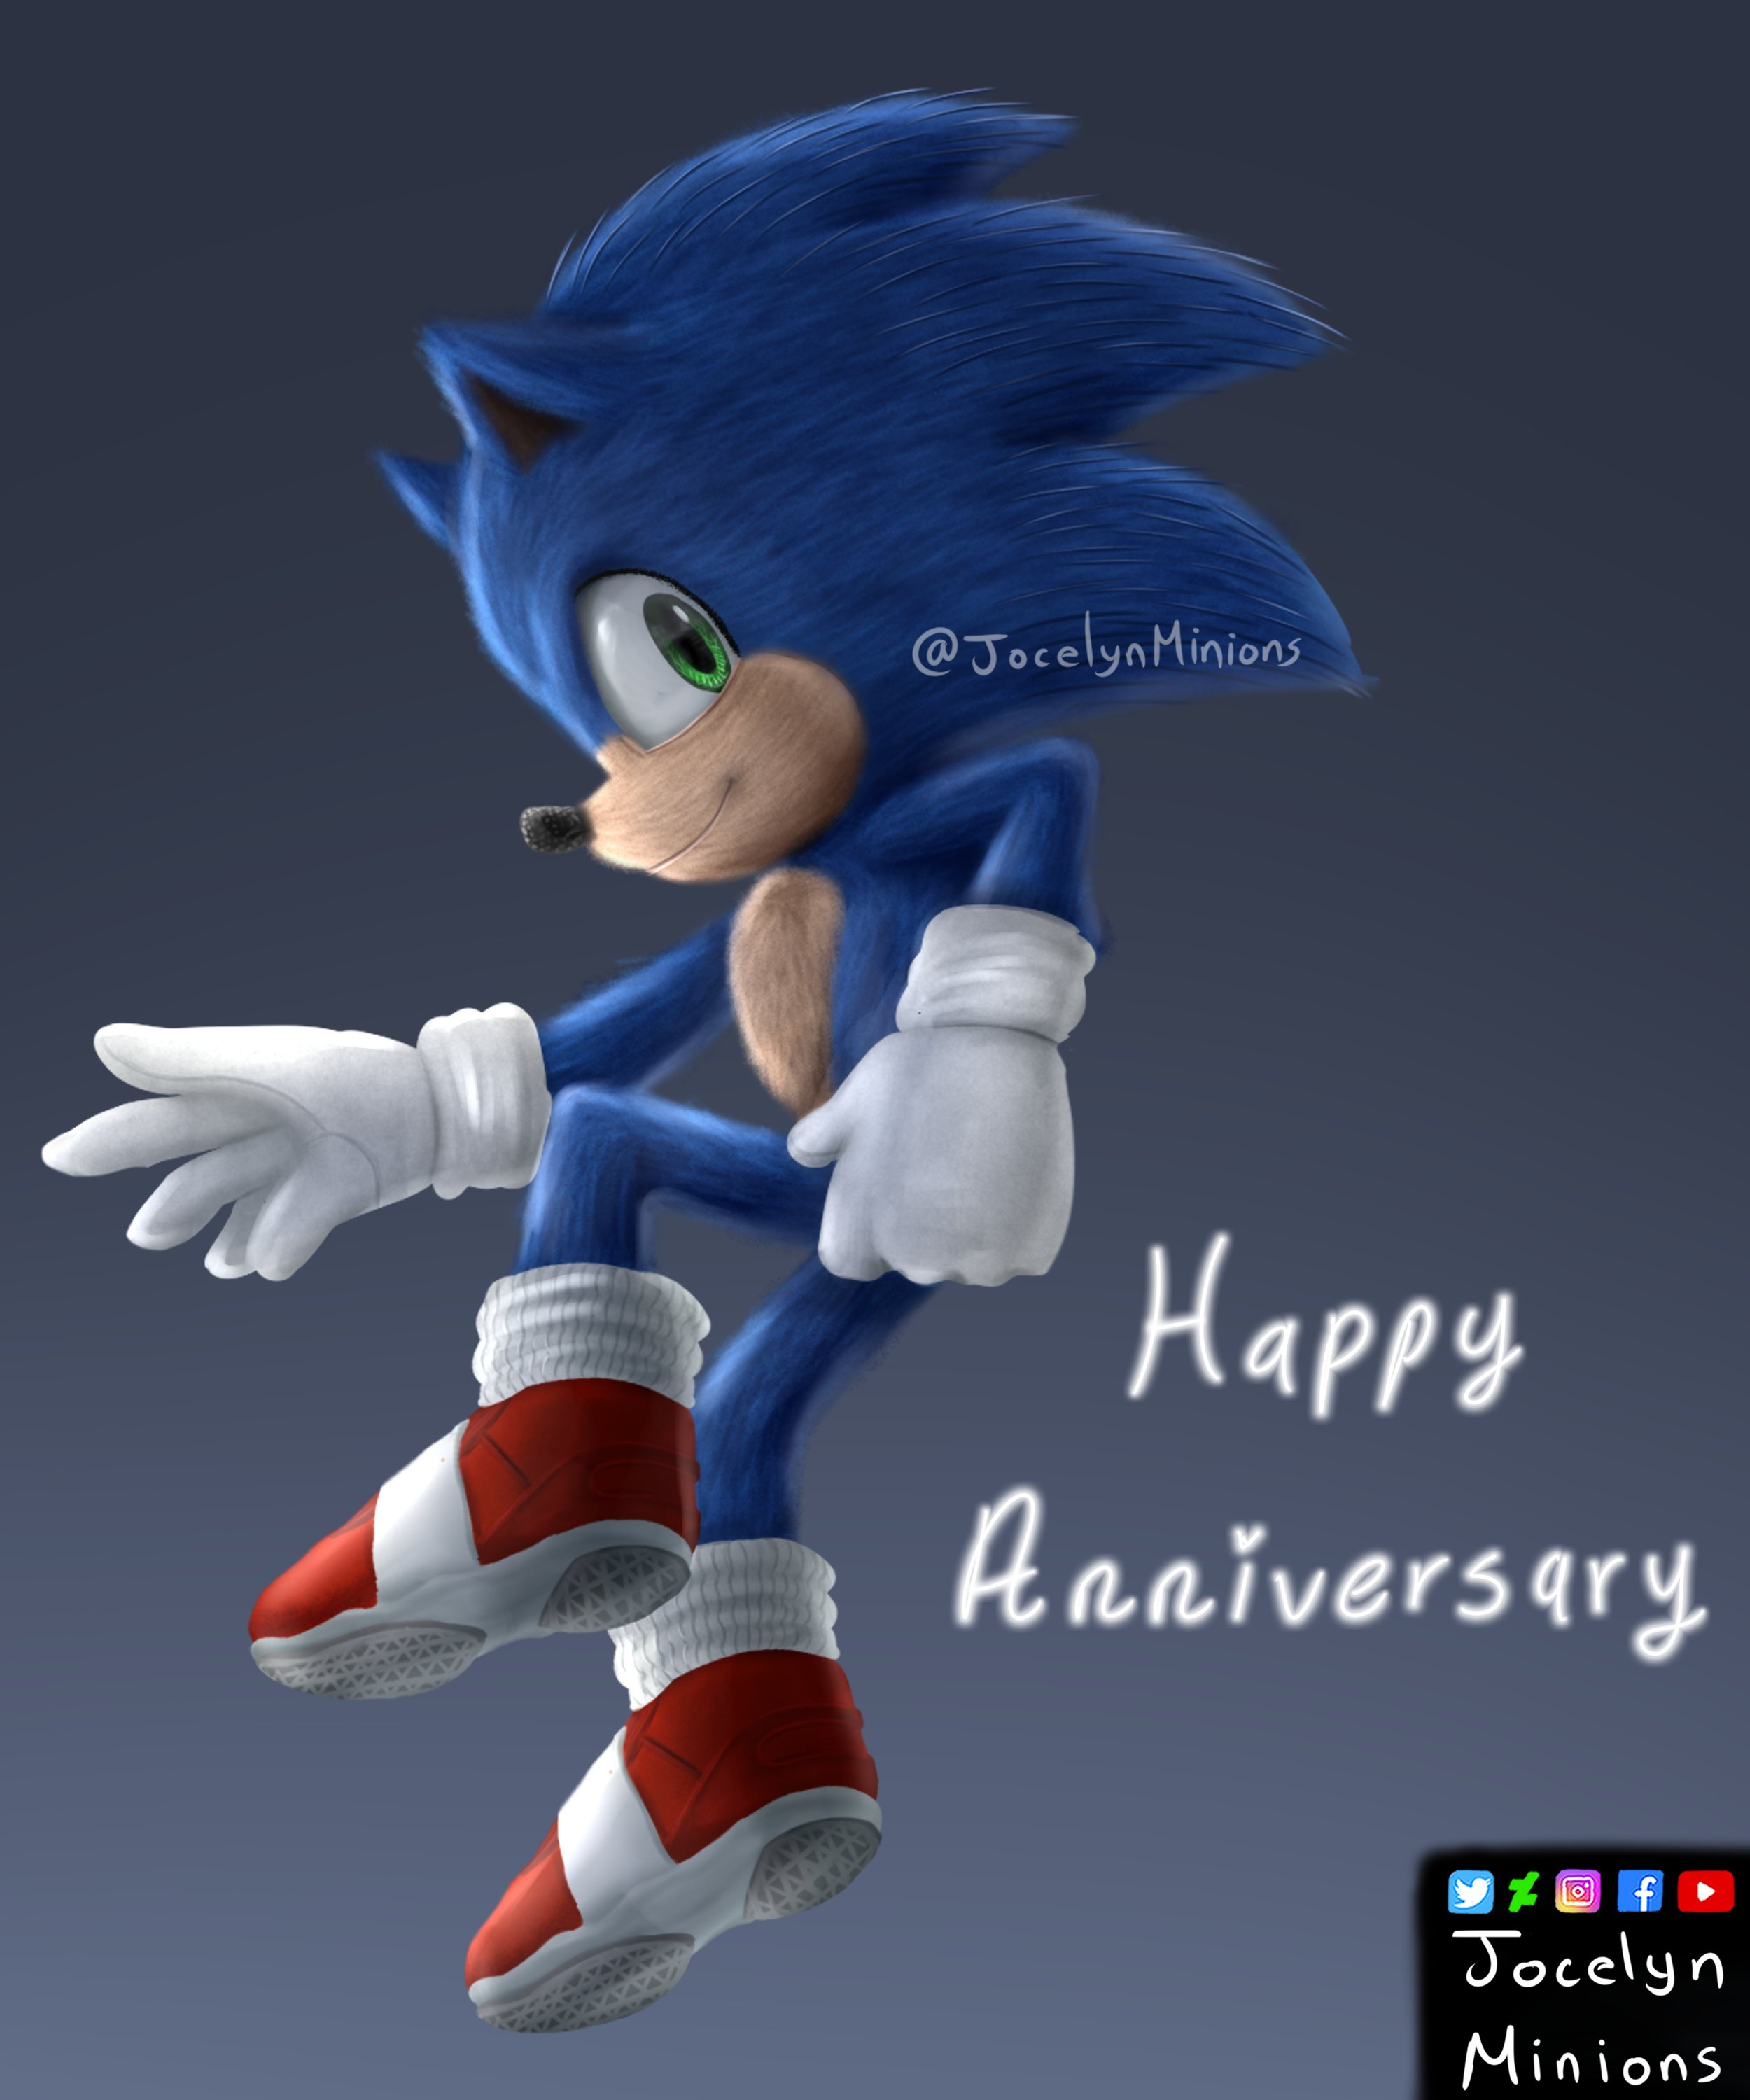 Happy Sonic Movie 2 Day : r/SonicTheHedgehog